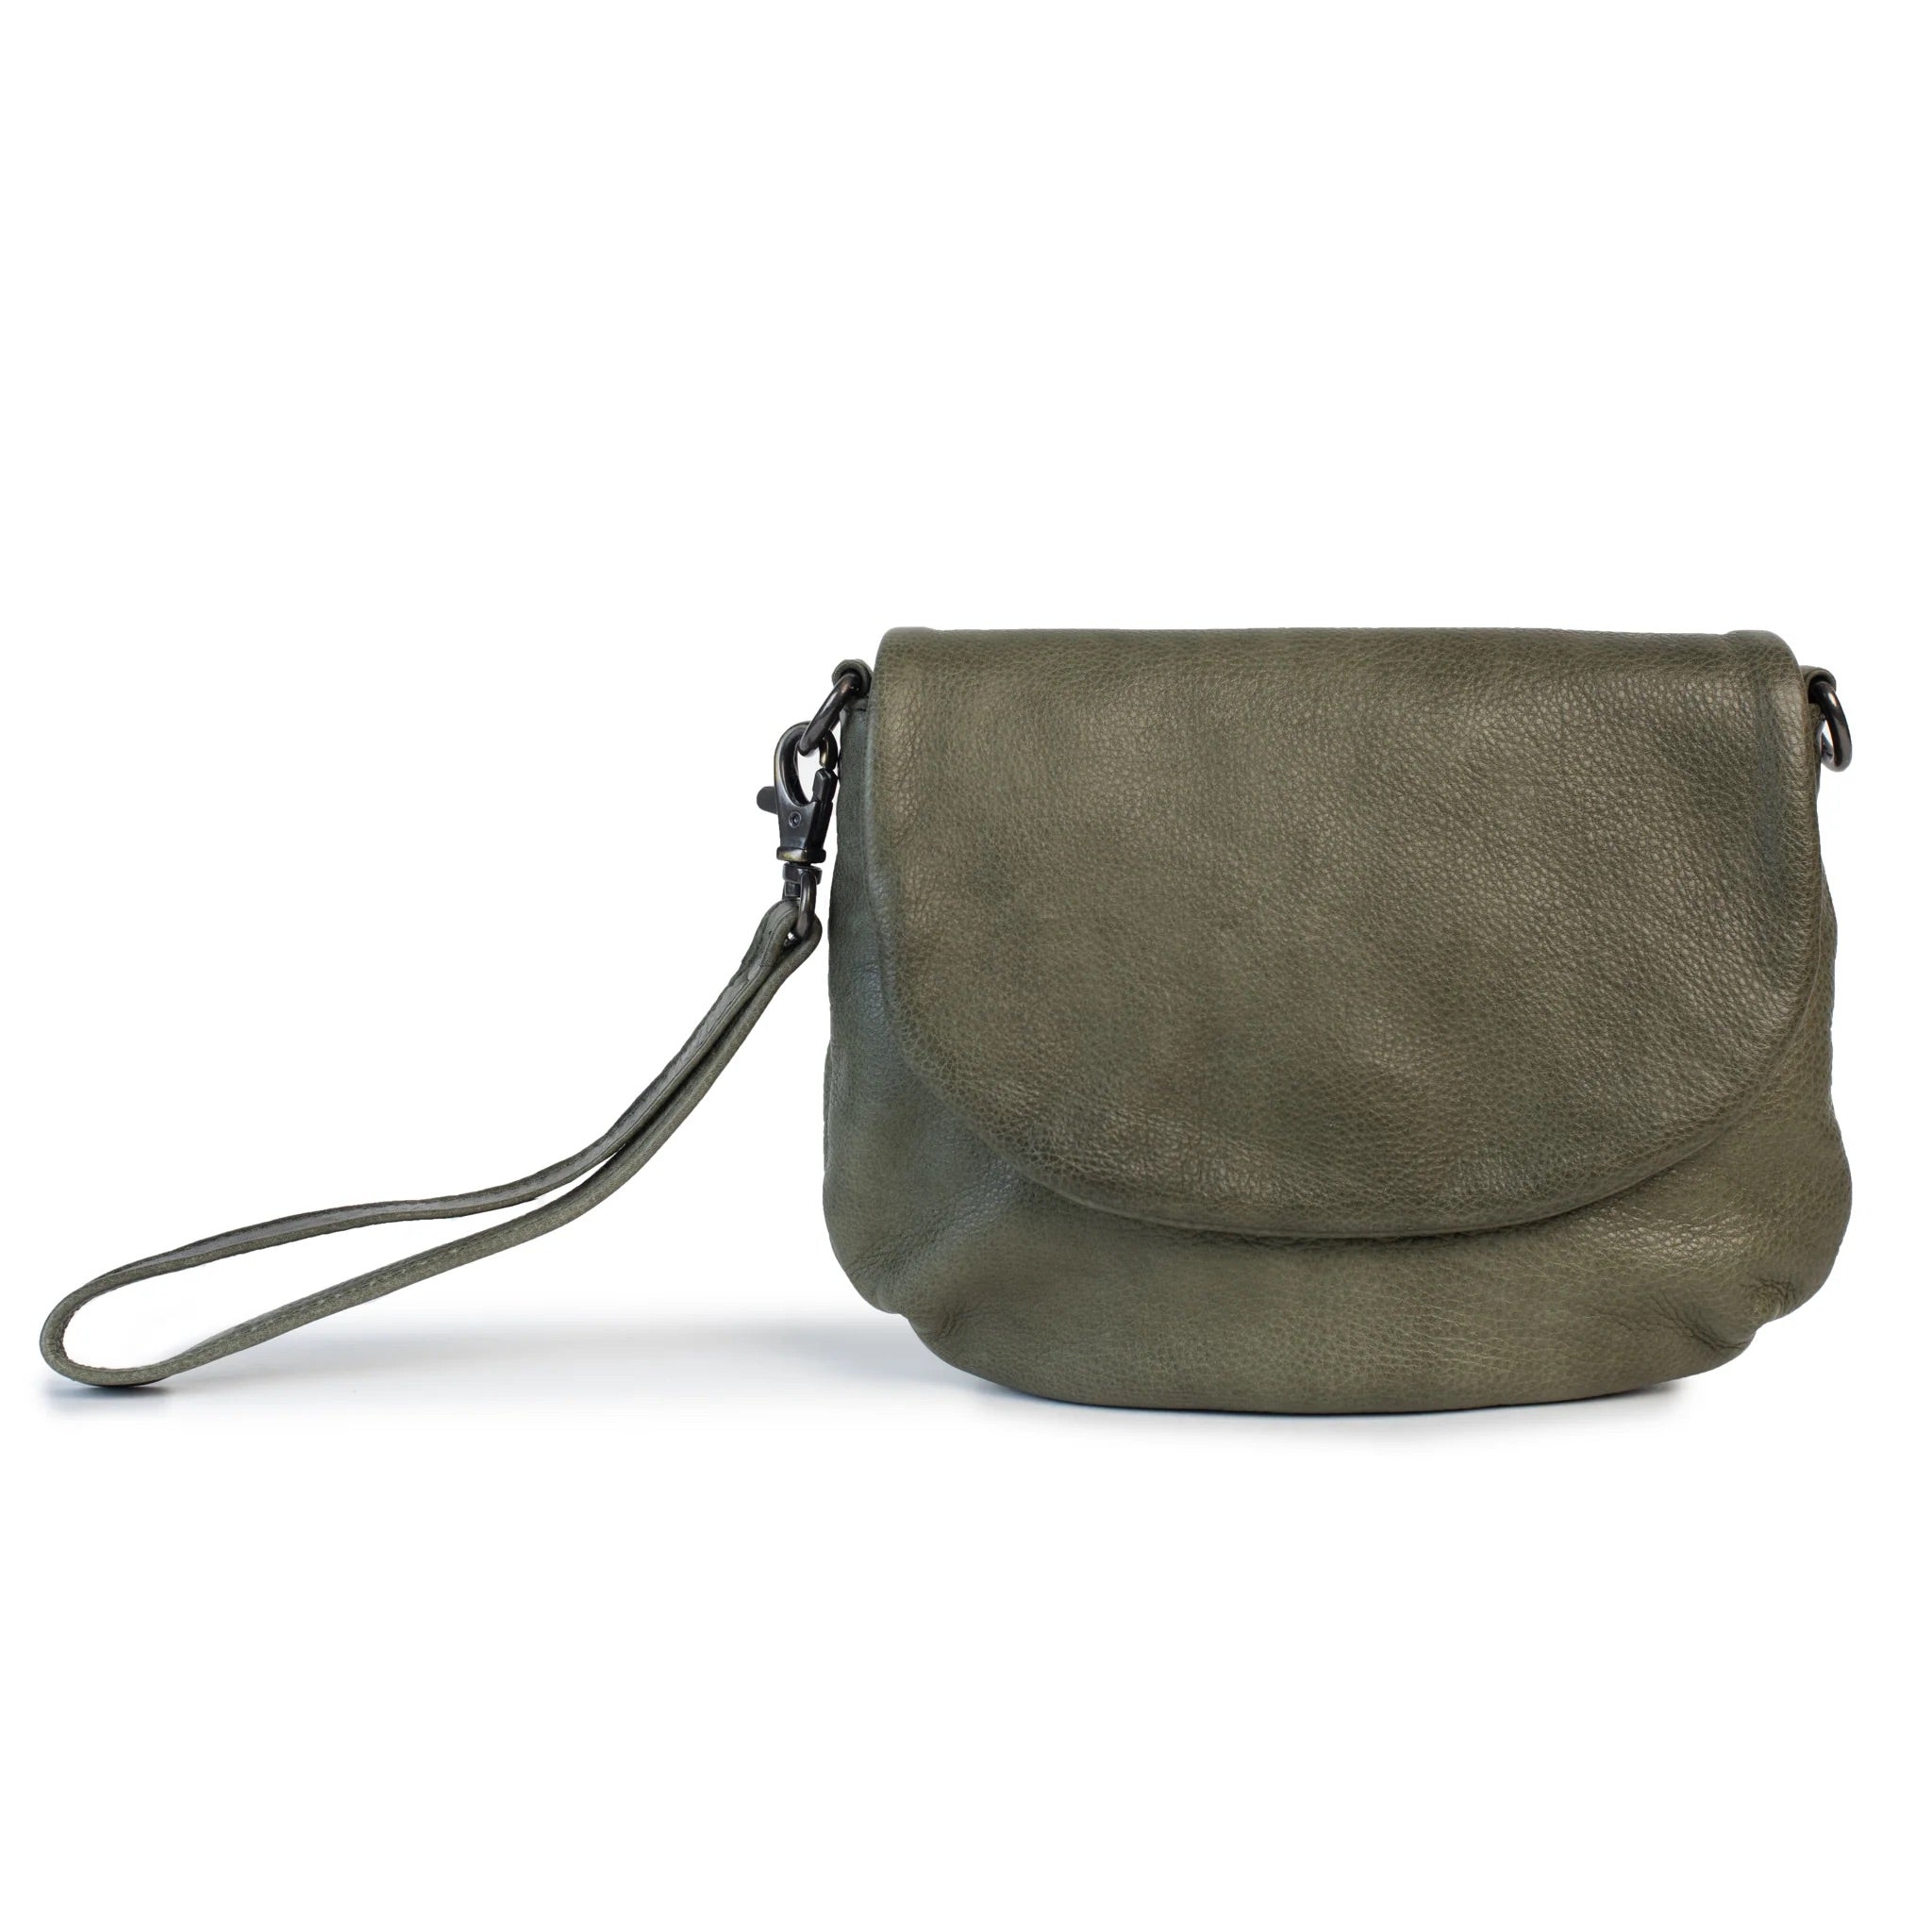 Zoe Leather Bag/Clutch